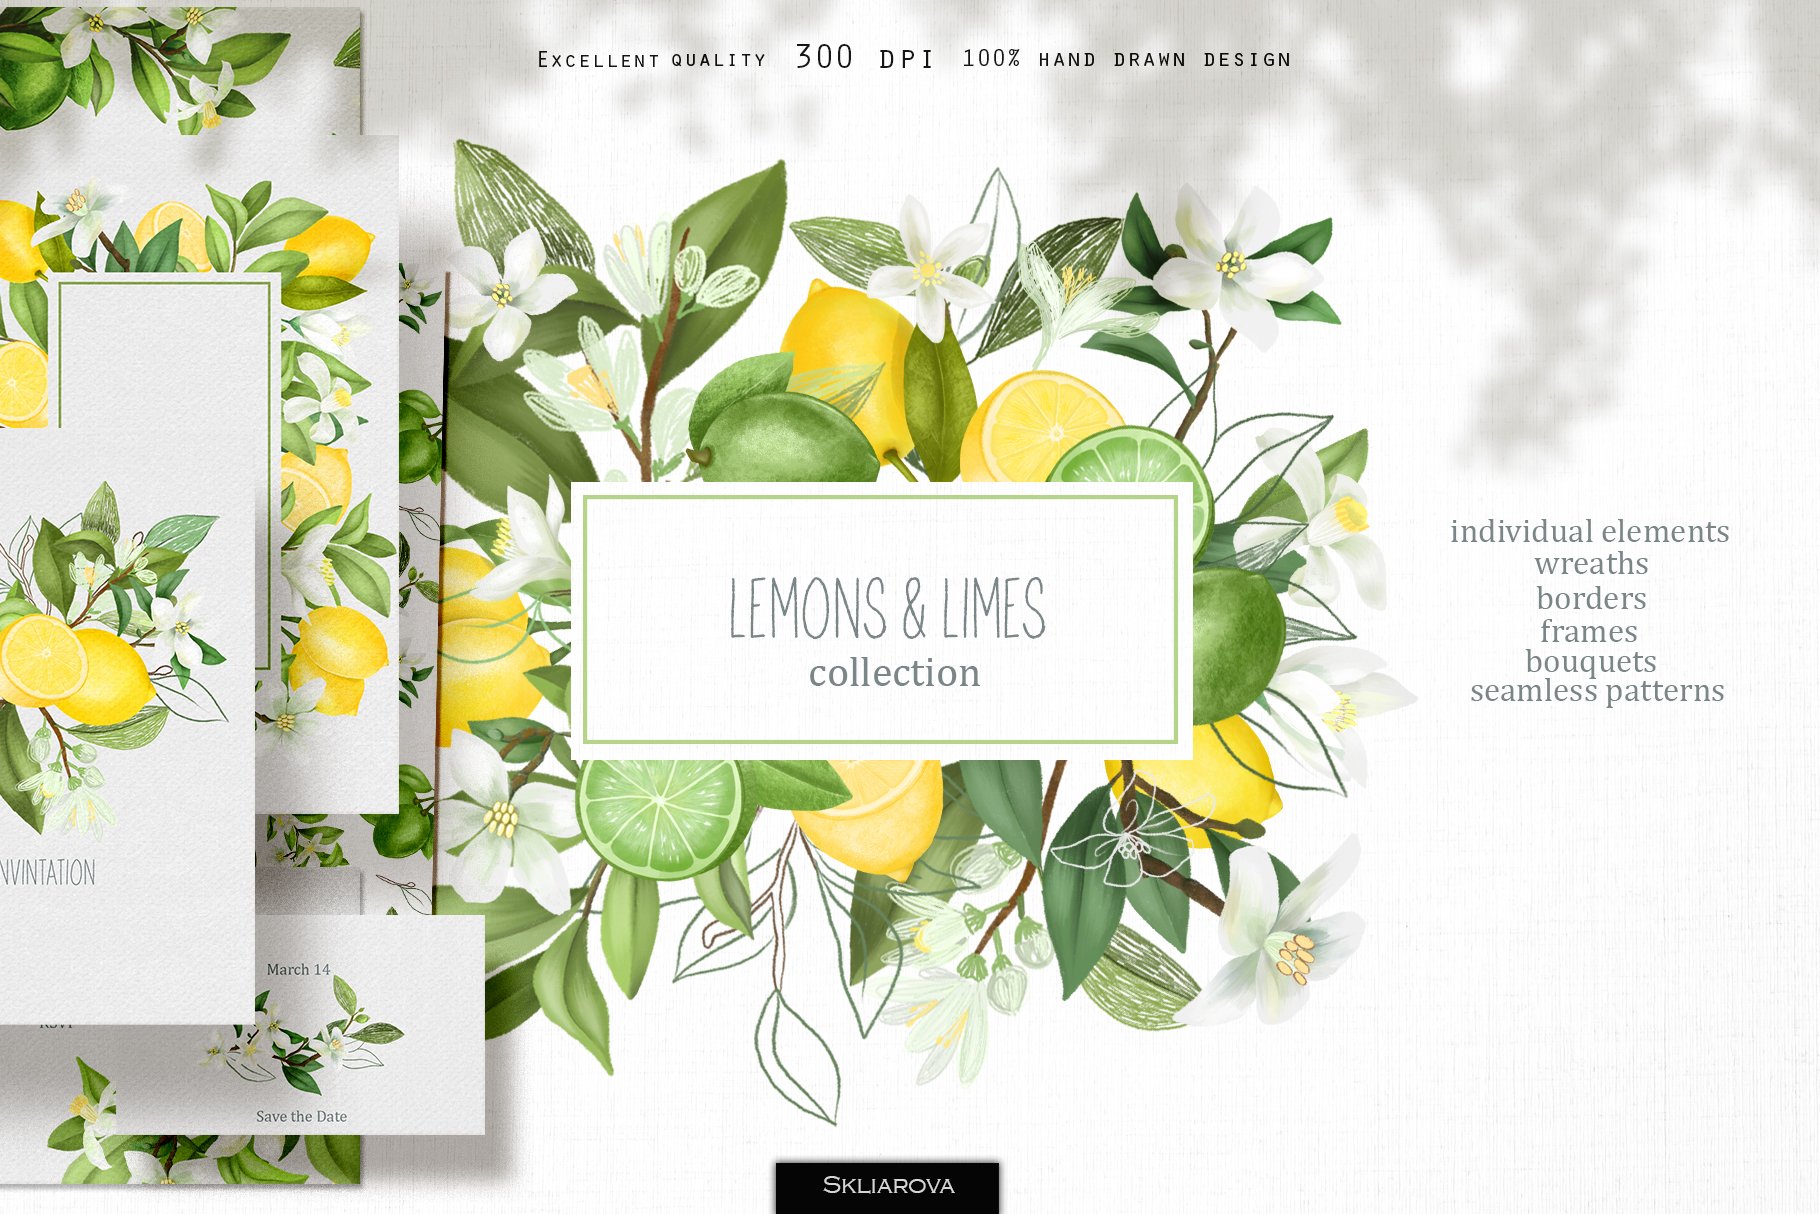 Lemons & limes collection cover image.